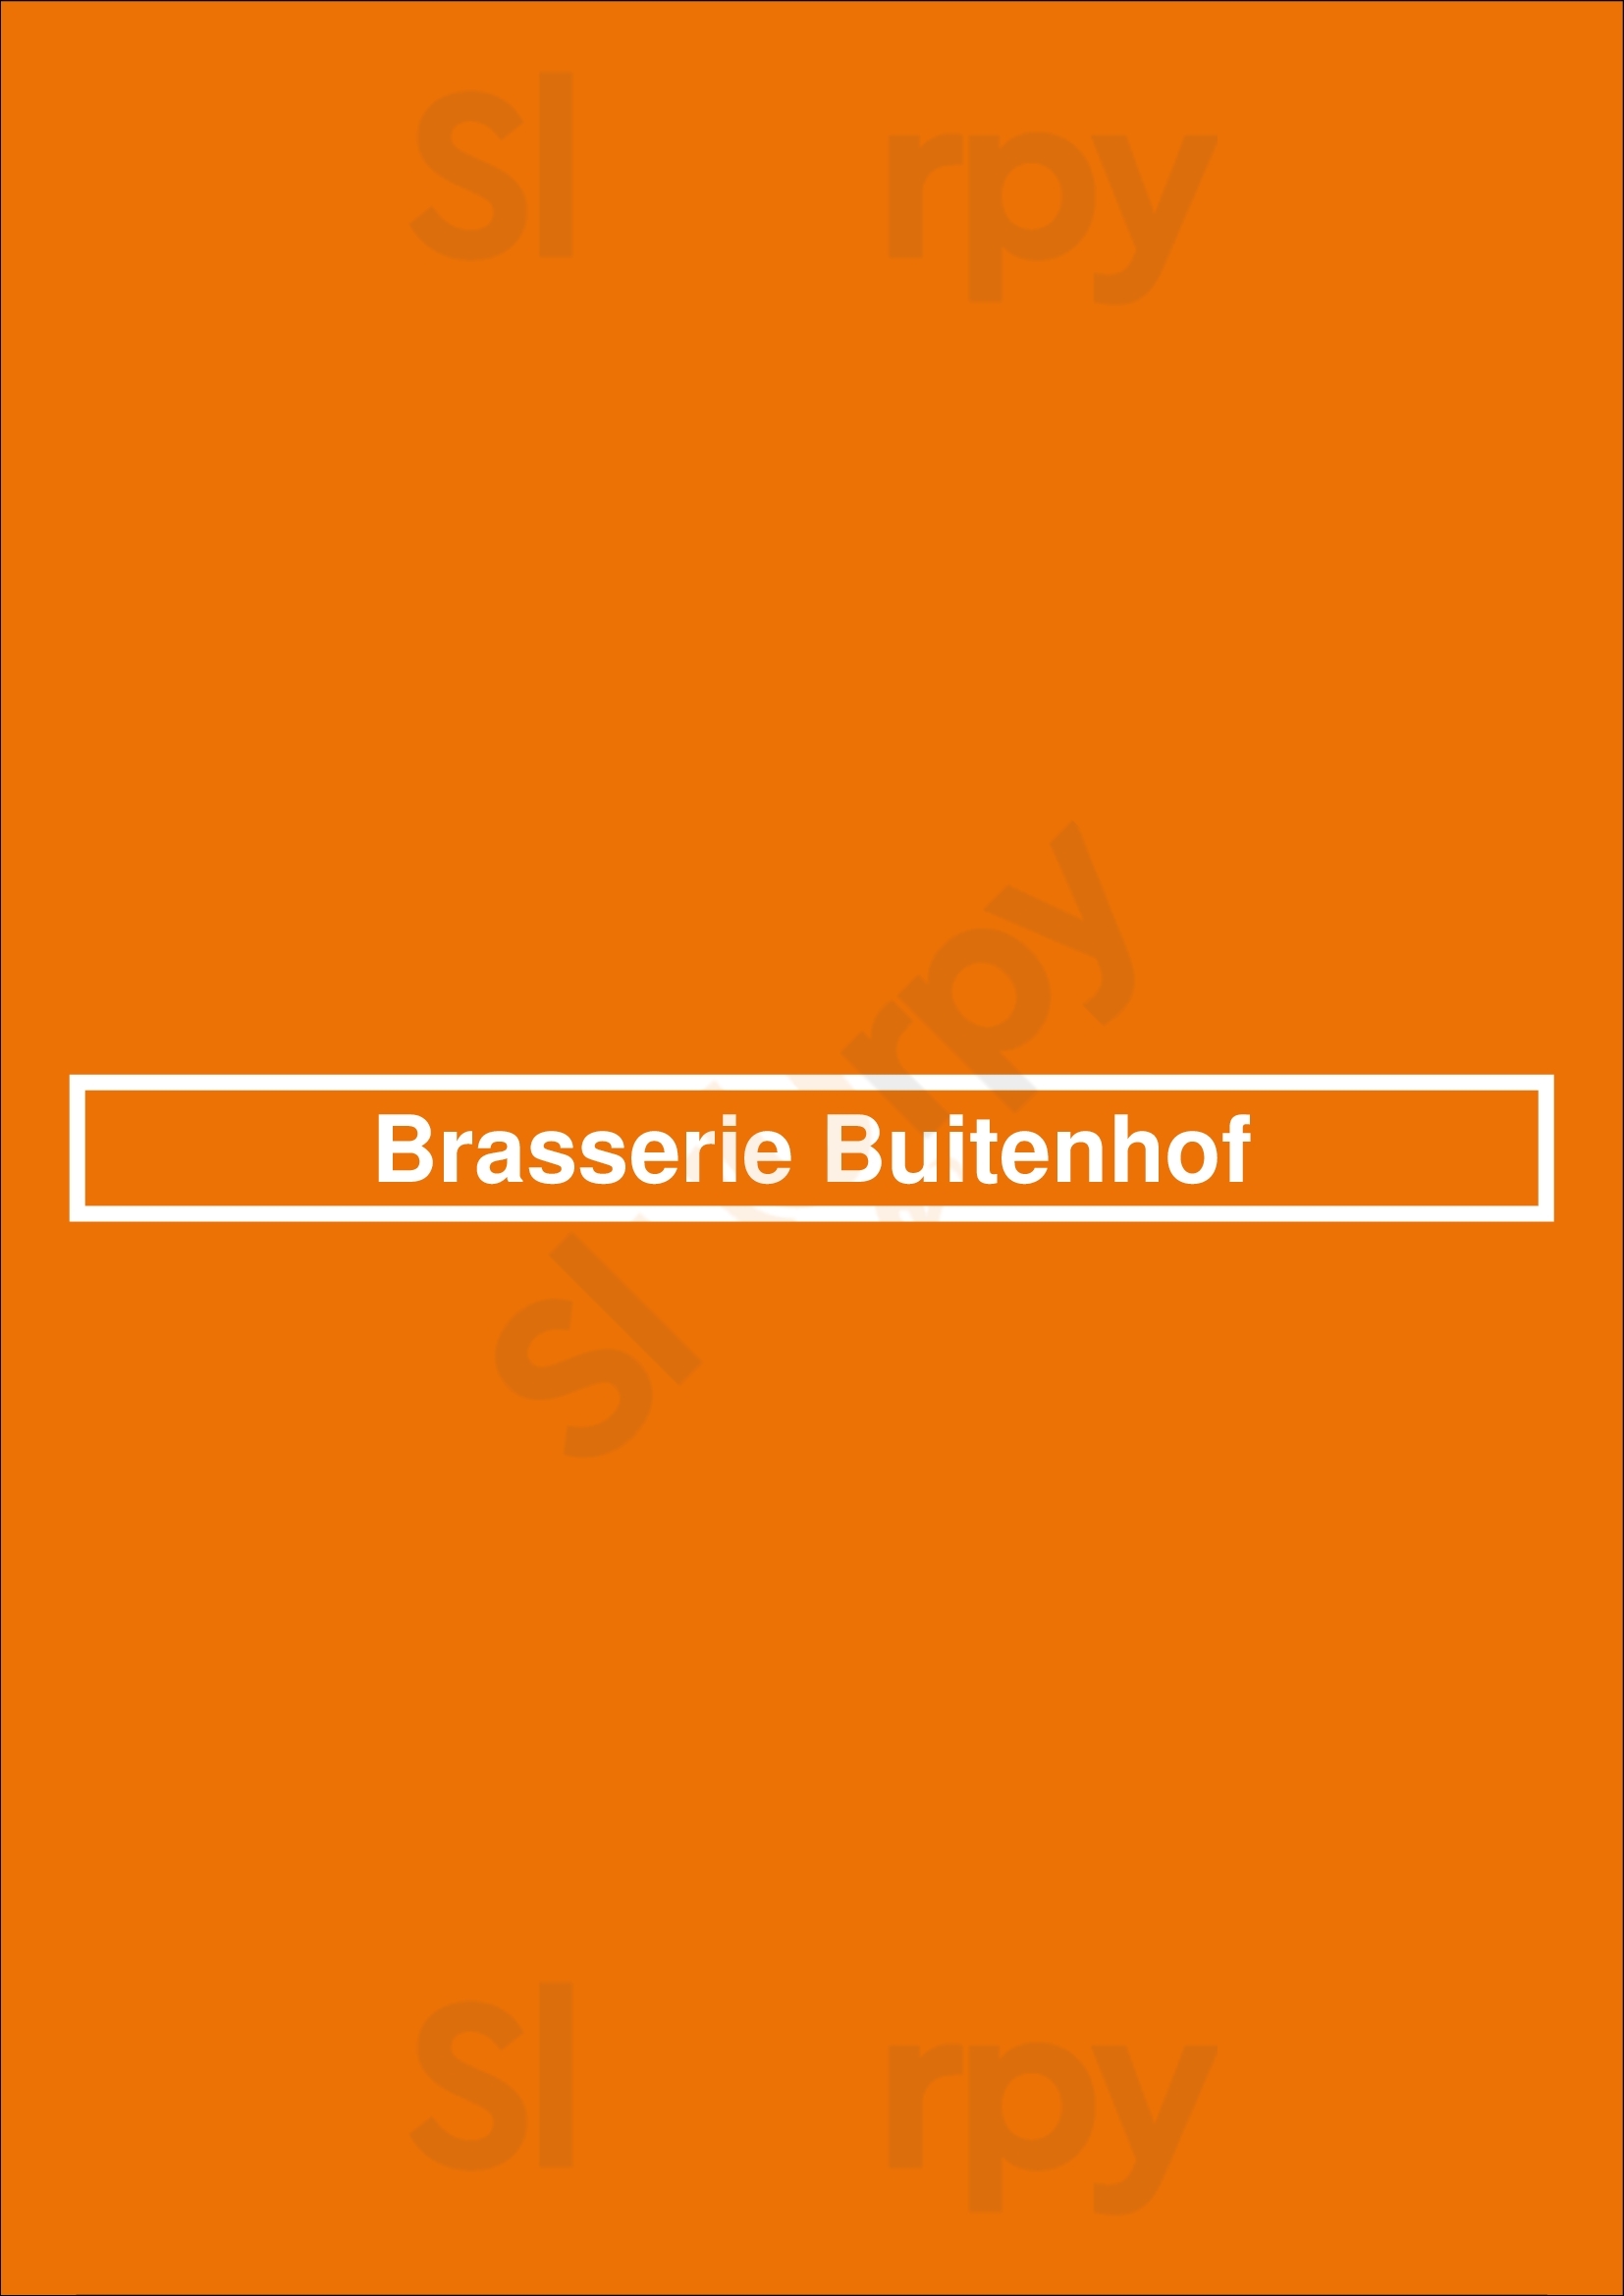 Brasserie Buitenhof Den Haag Menu - 1